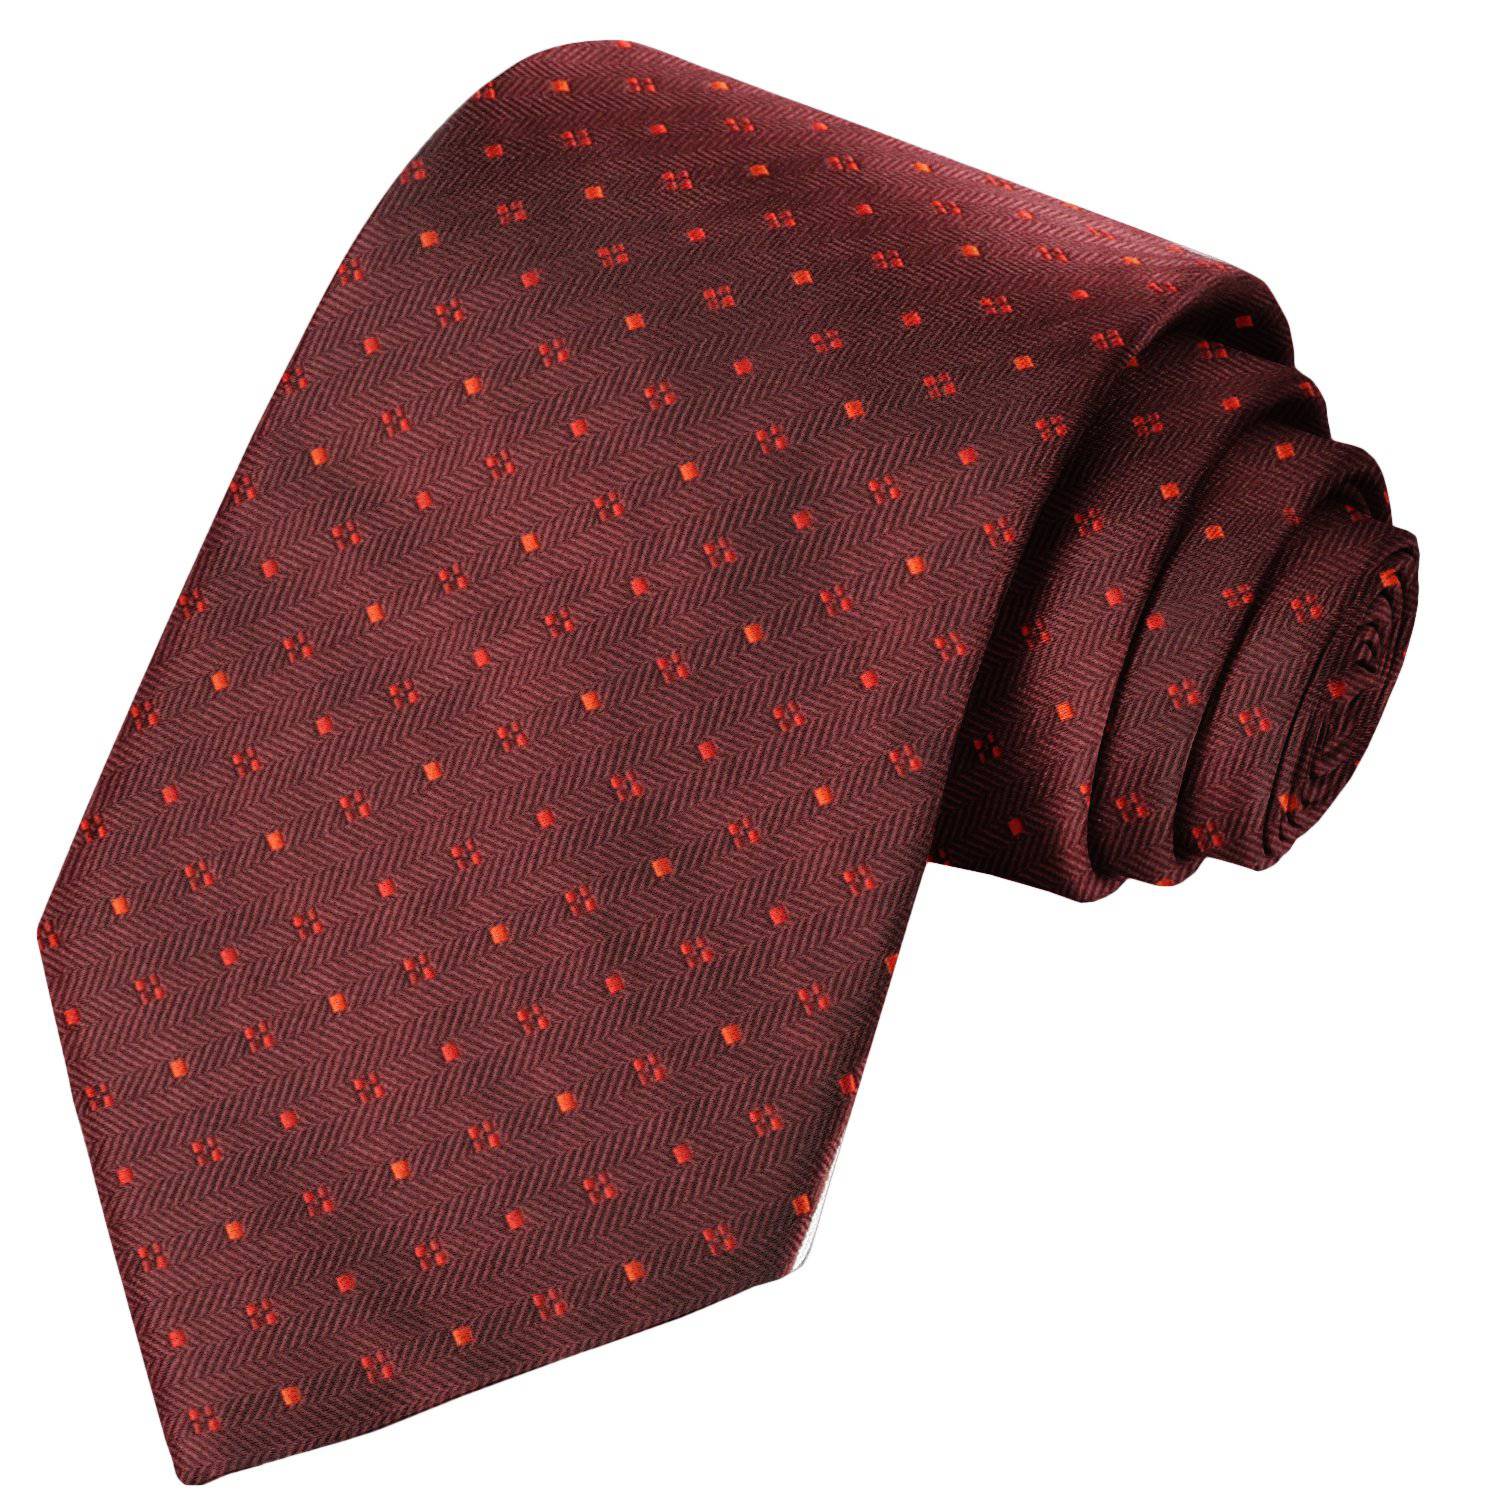 Candy Floral on Garnet Striped Tie - Tie, bowtie, pocket square  | Kissties